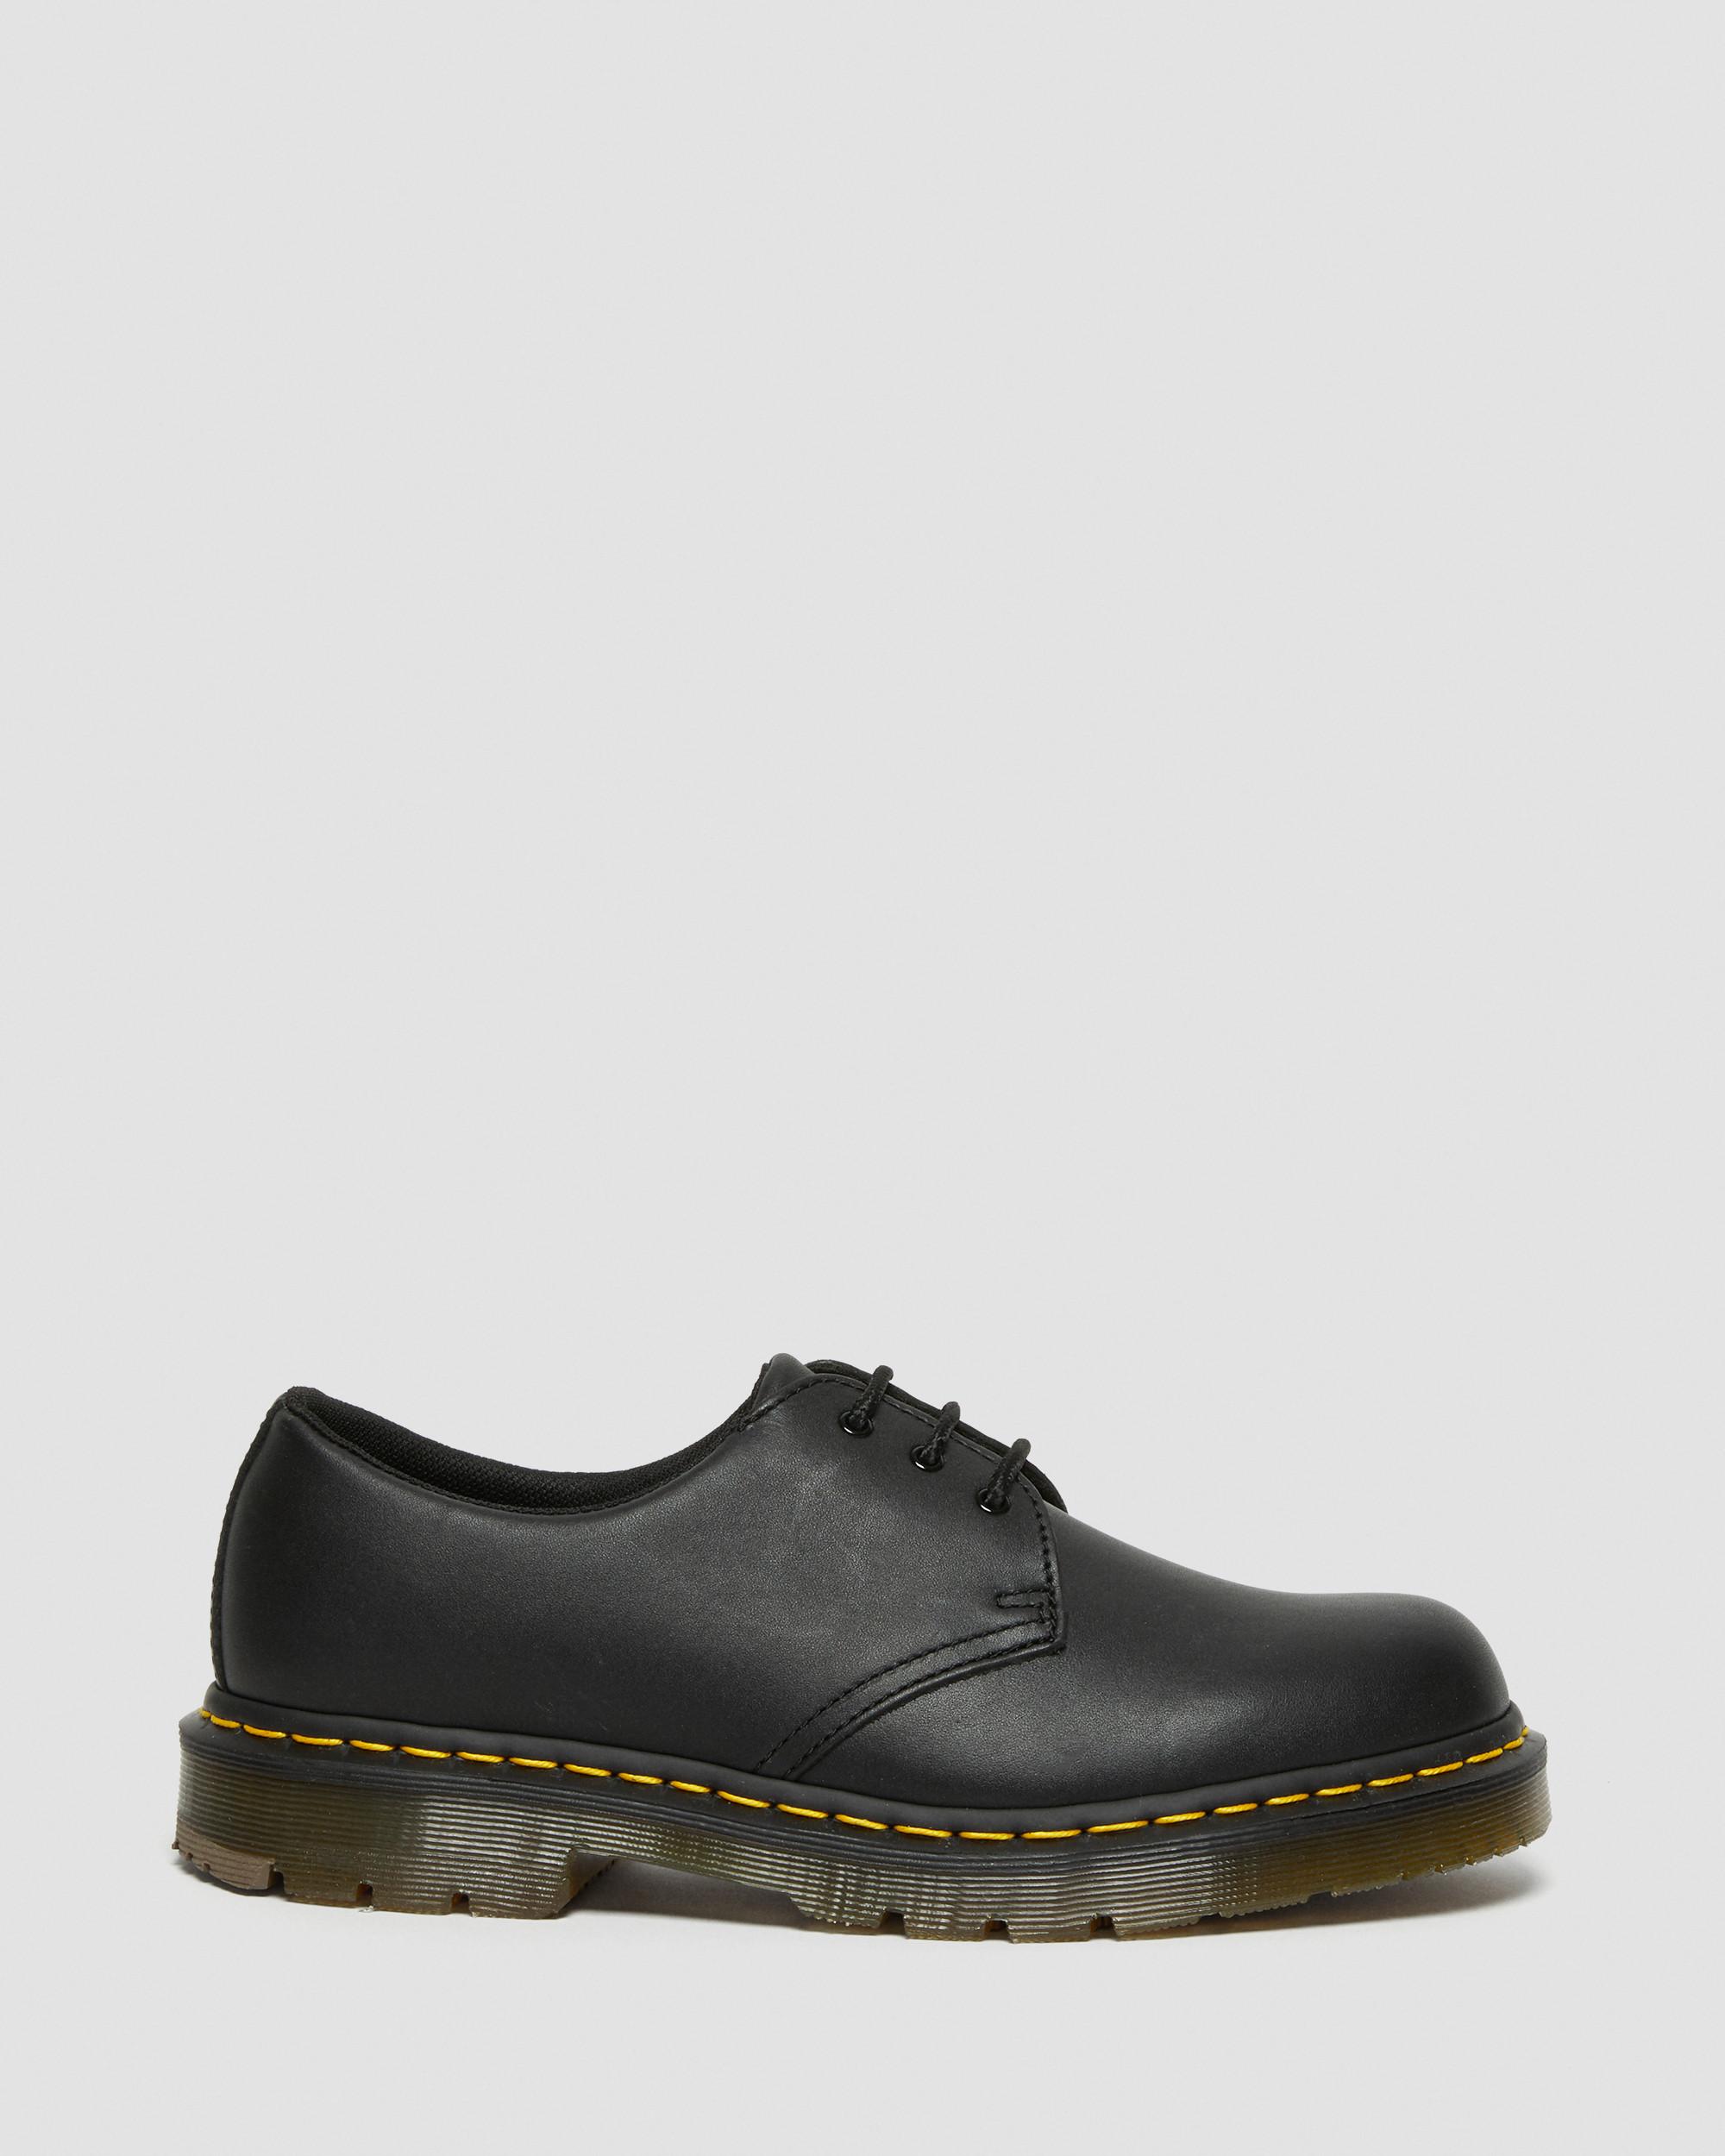 DR MARTENS 1461 Slip Resistant Leather Oxford Shoes